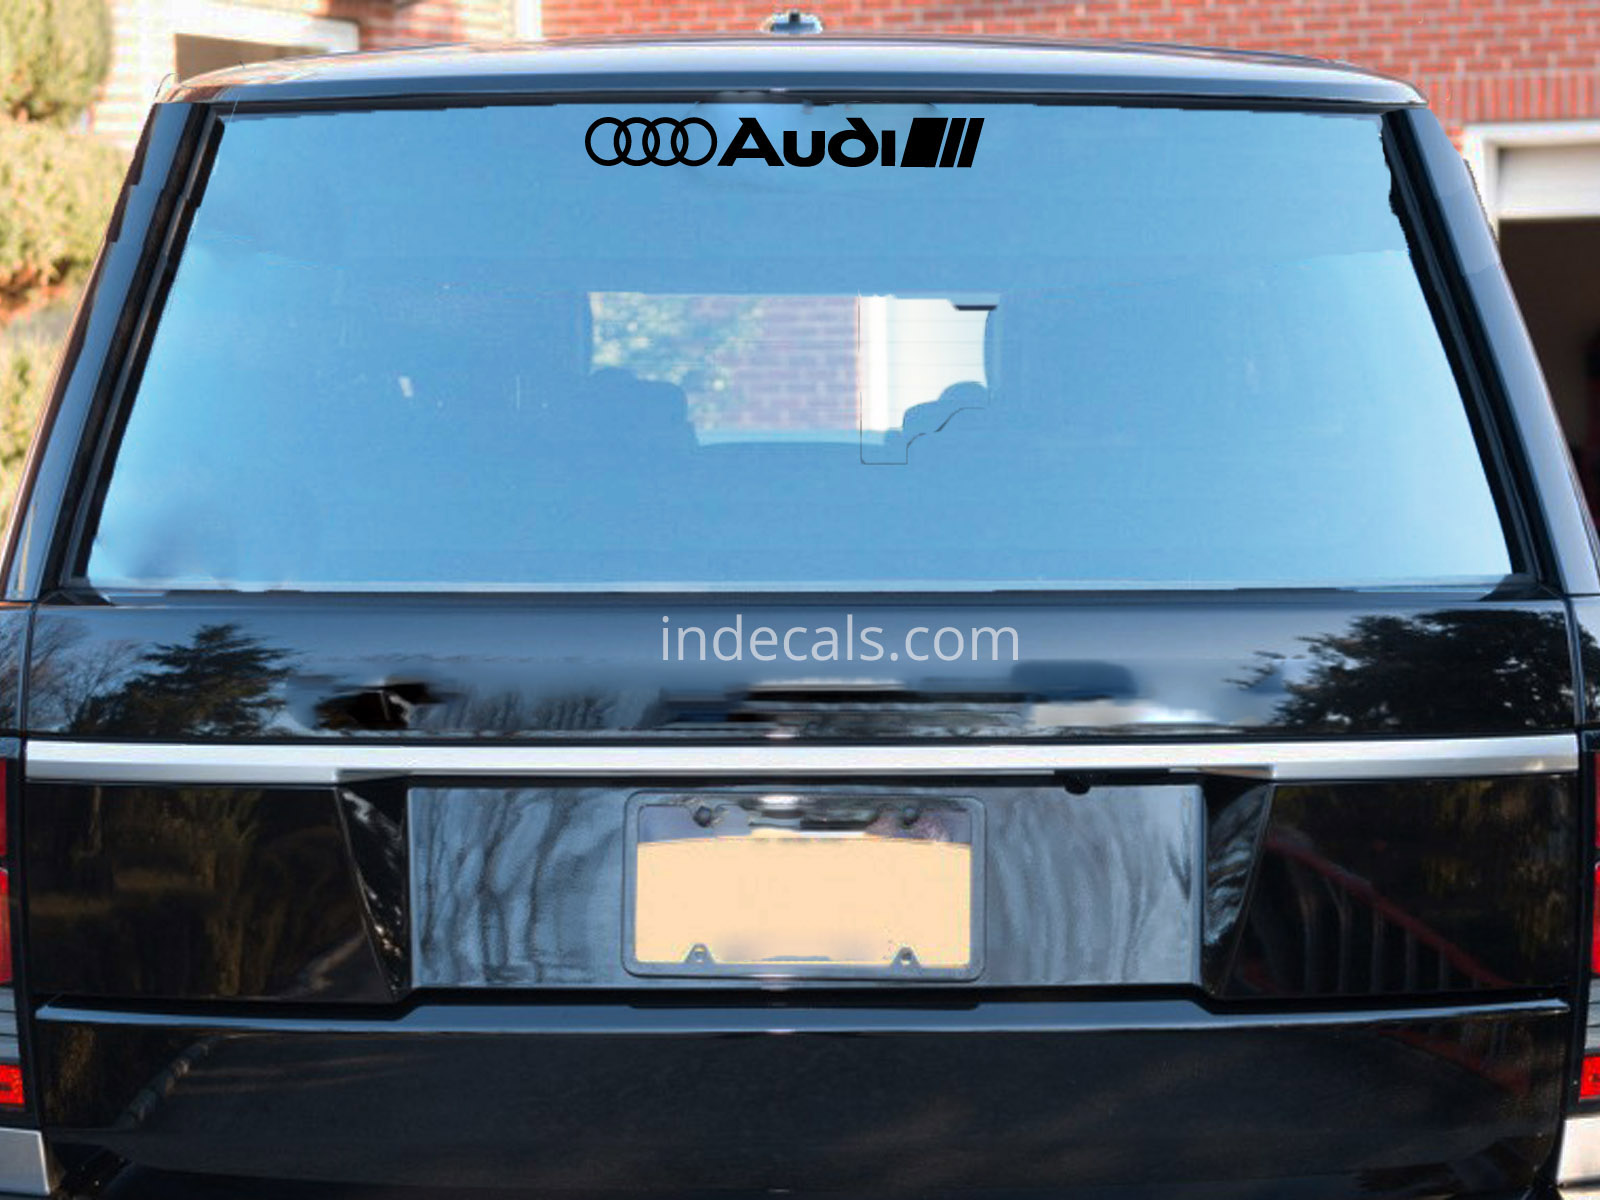 1 x Audi Sticker for Windshield or Back Window - Black